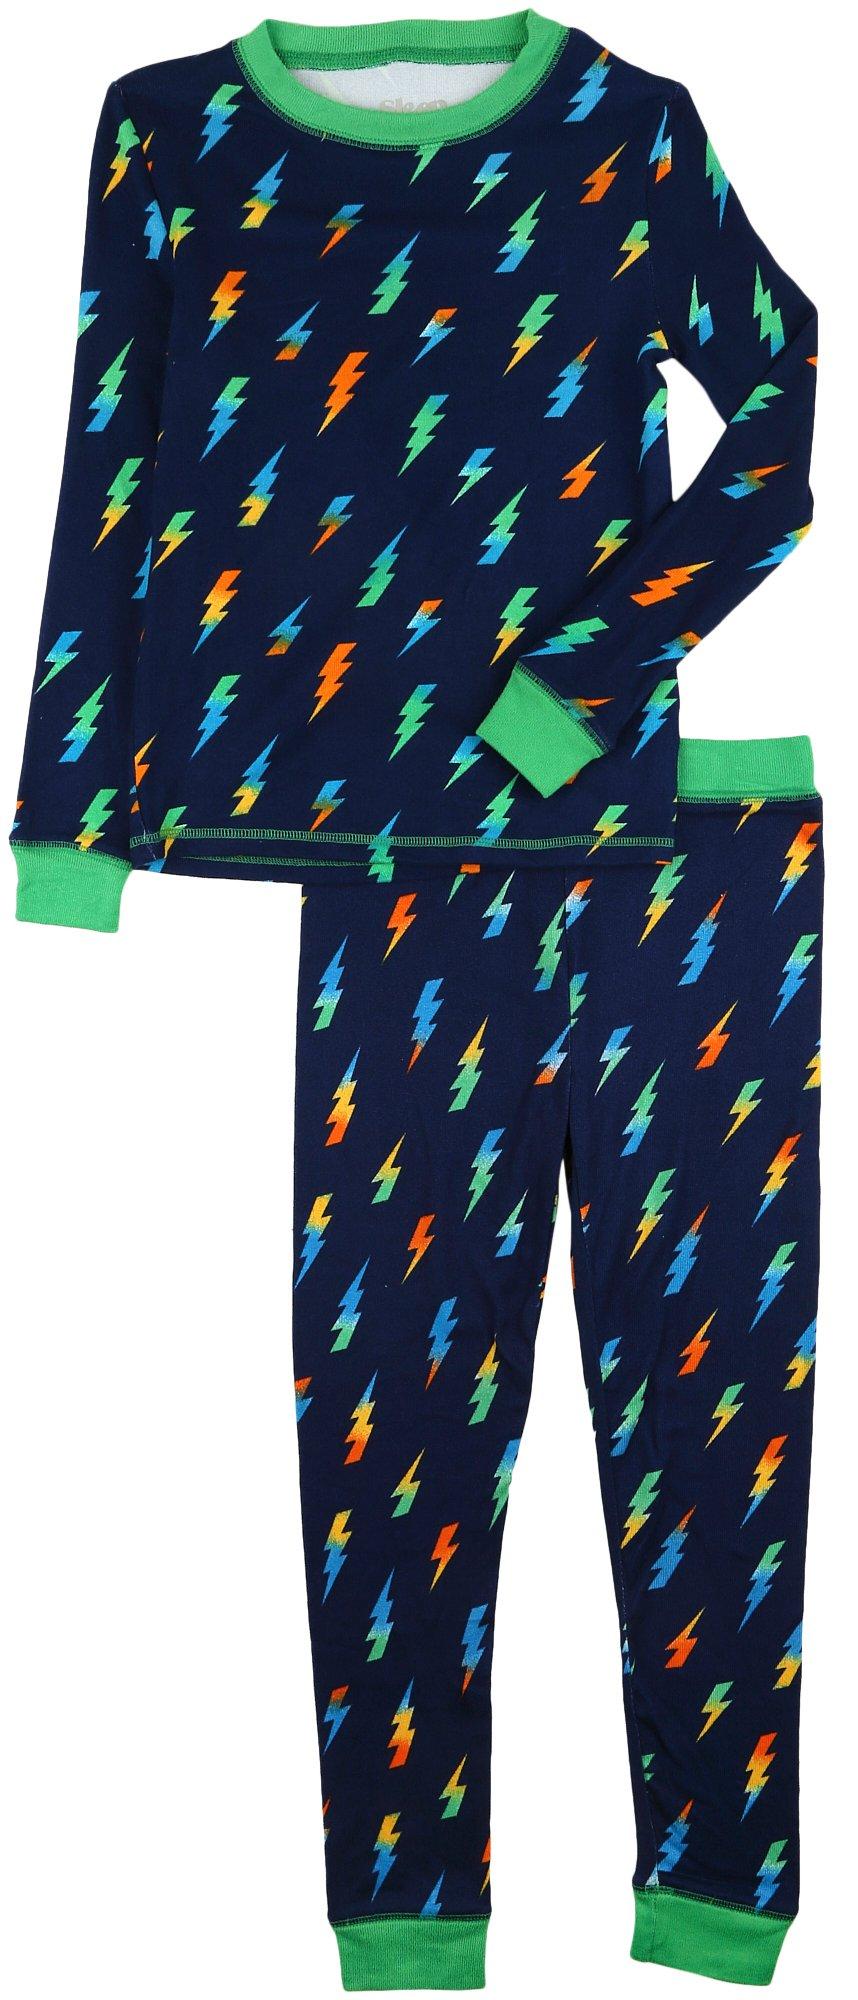 Little & Big Boys 2-pc. Lightning Pajama Set